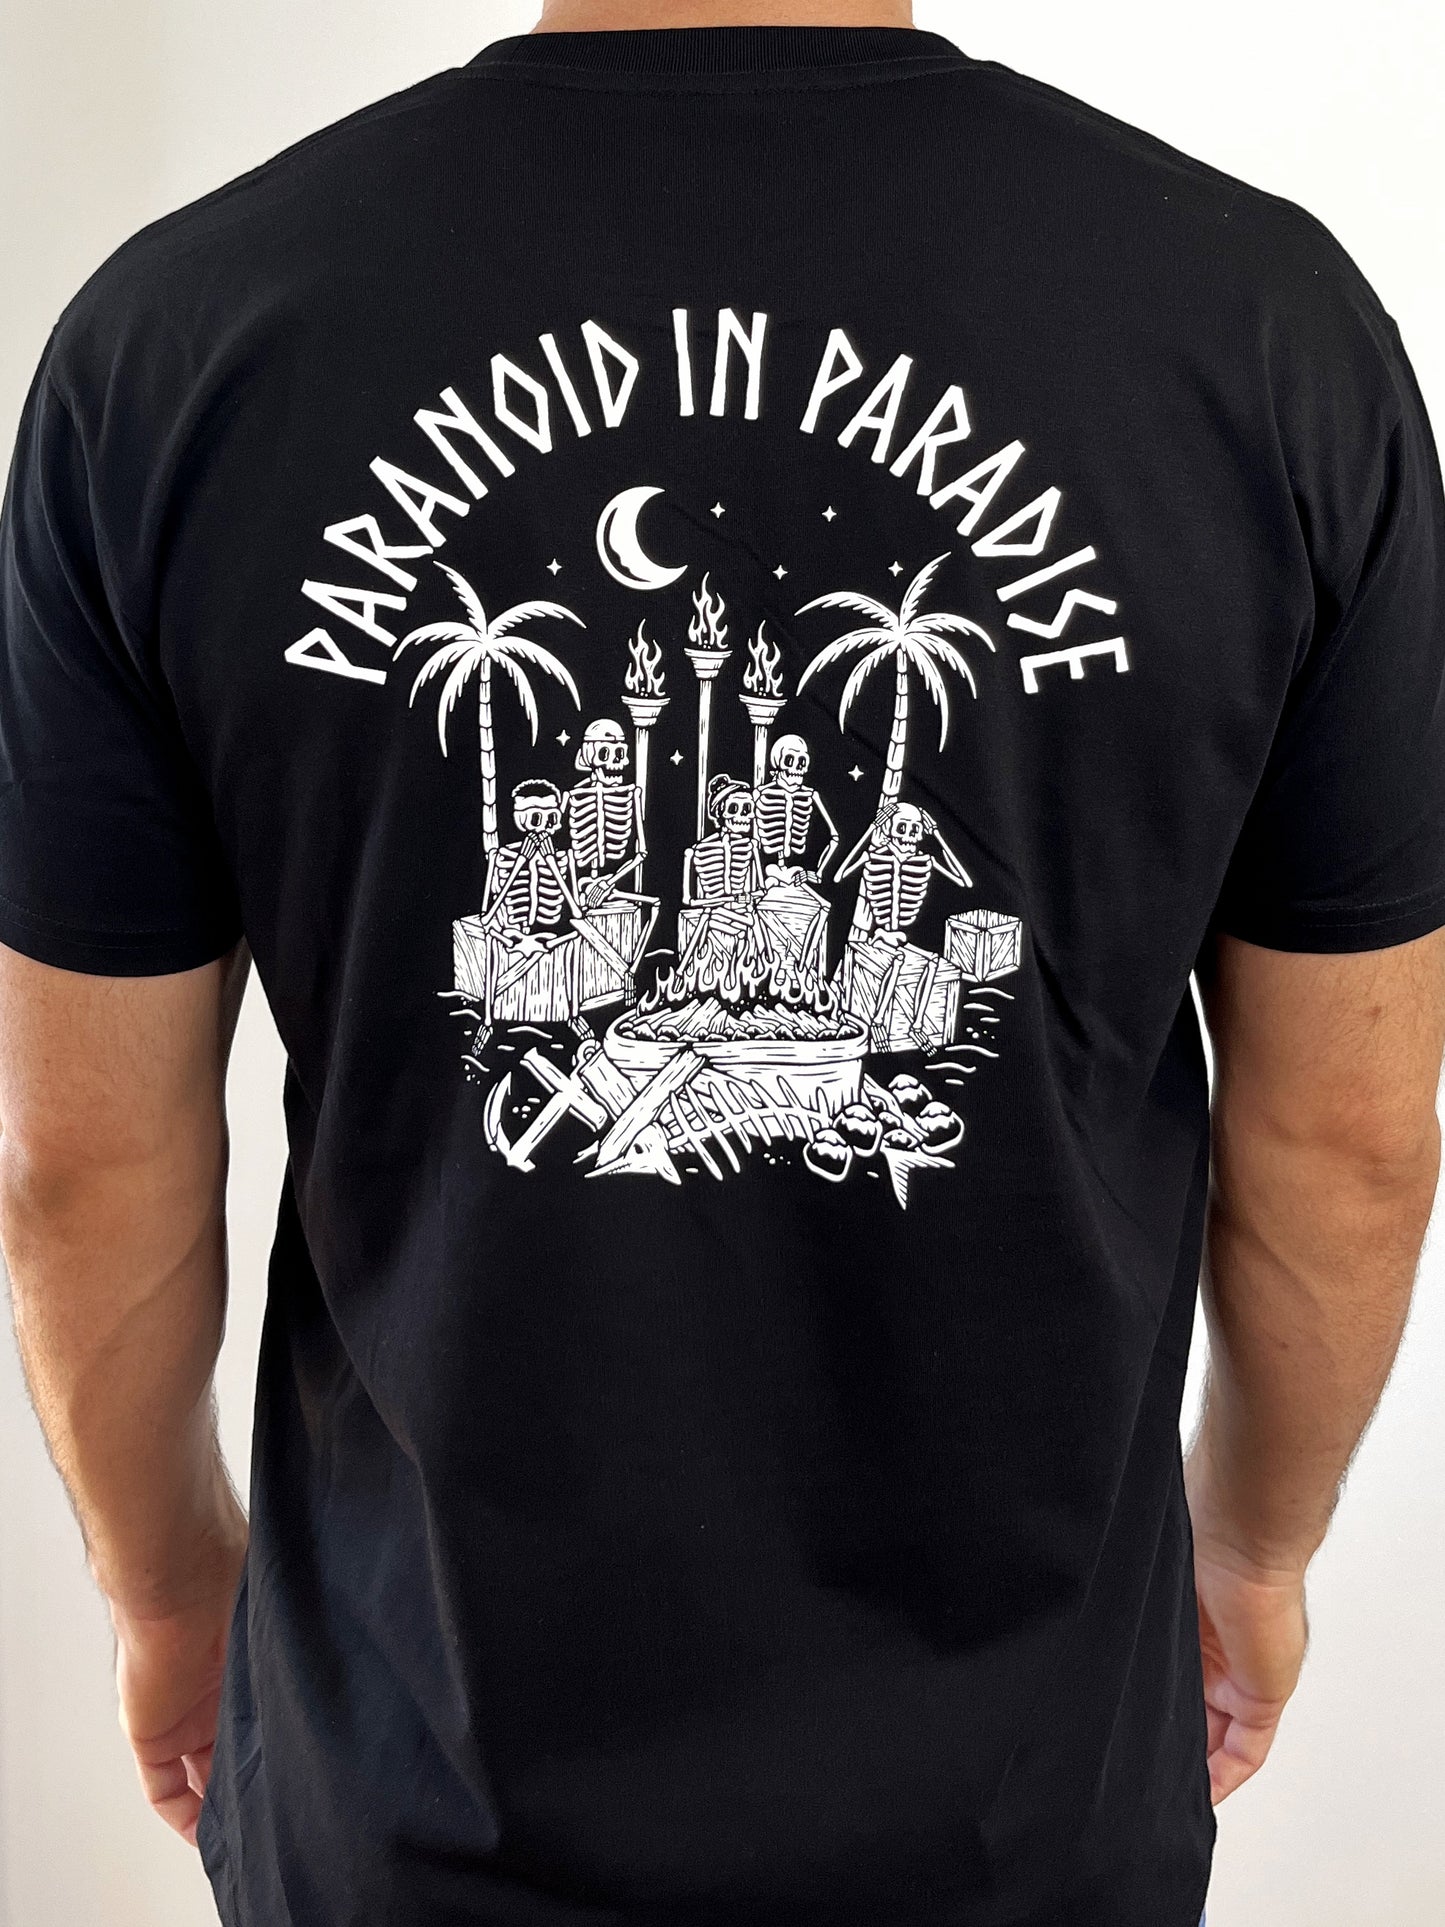 Tribal Council 'Paranoid in Paradise' T-Shirt Black - Men's